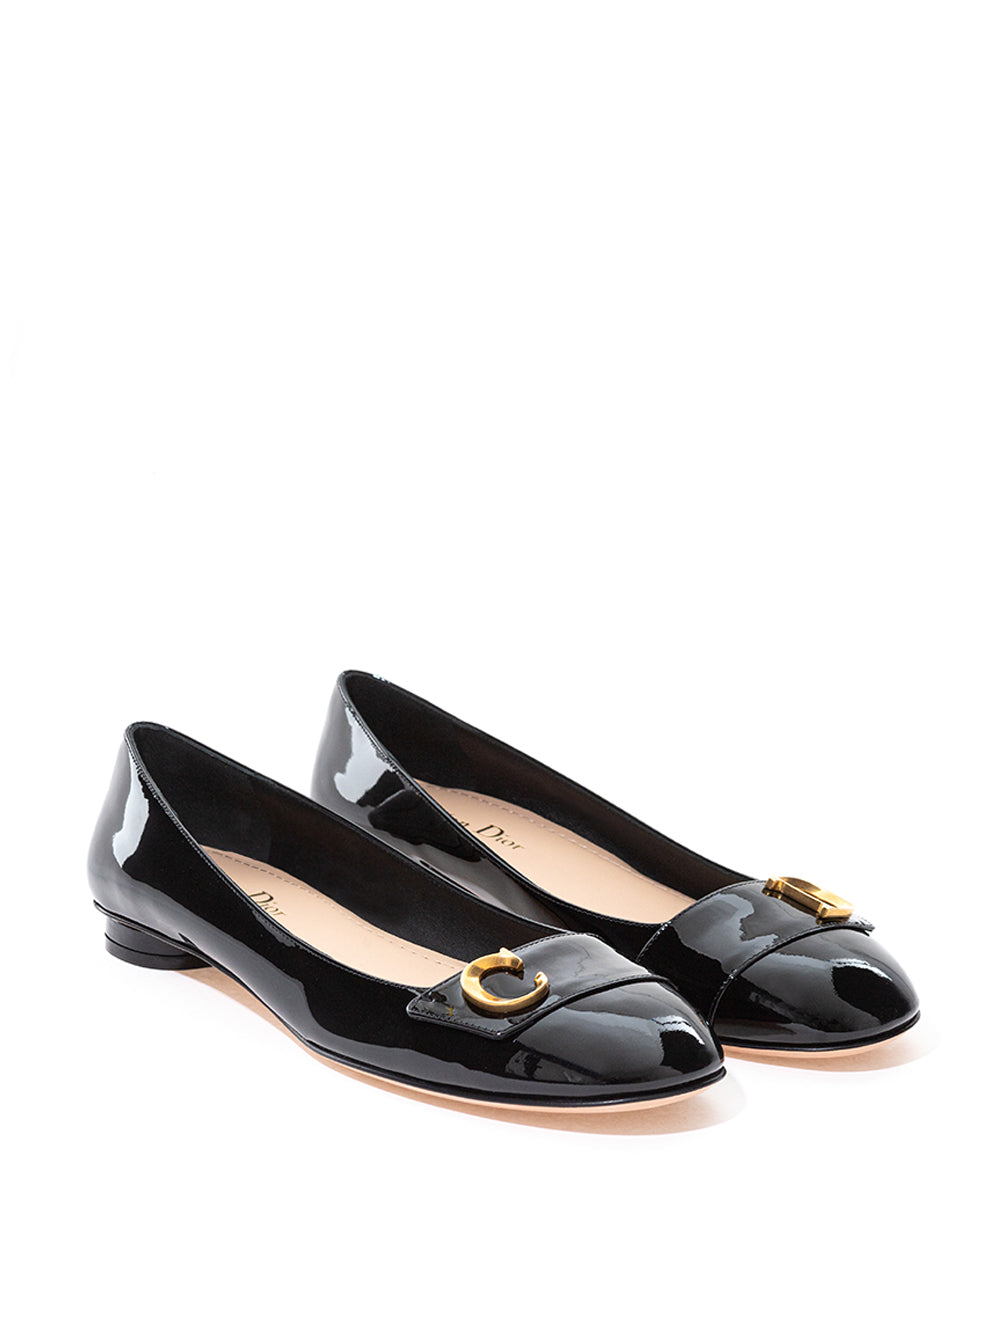 Dior Elegant Black Patent Leather Ballerina Women's Flats